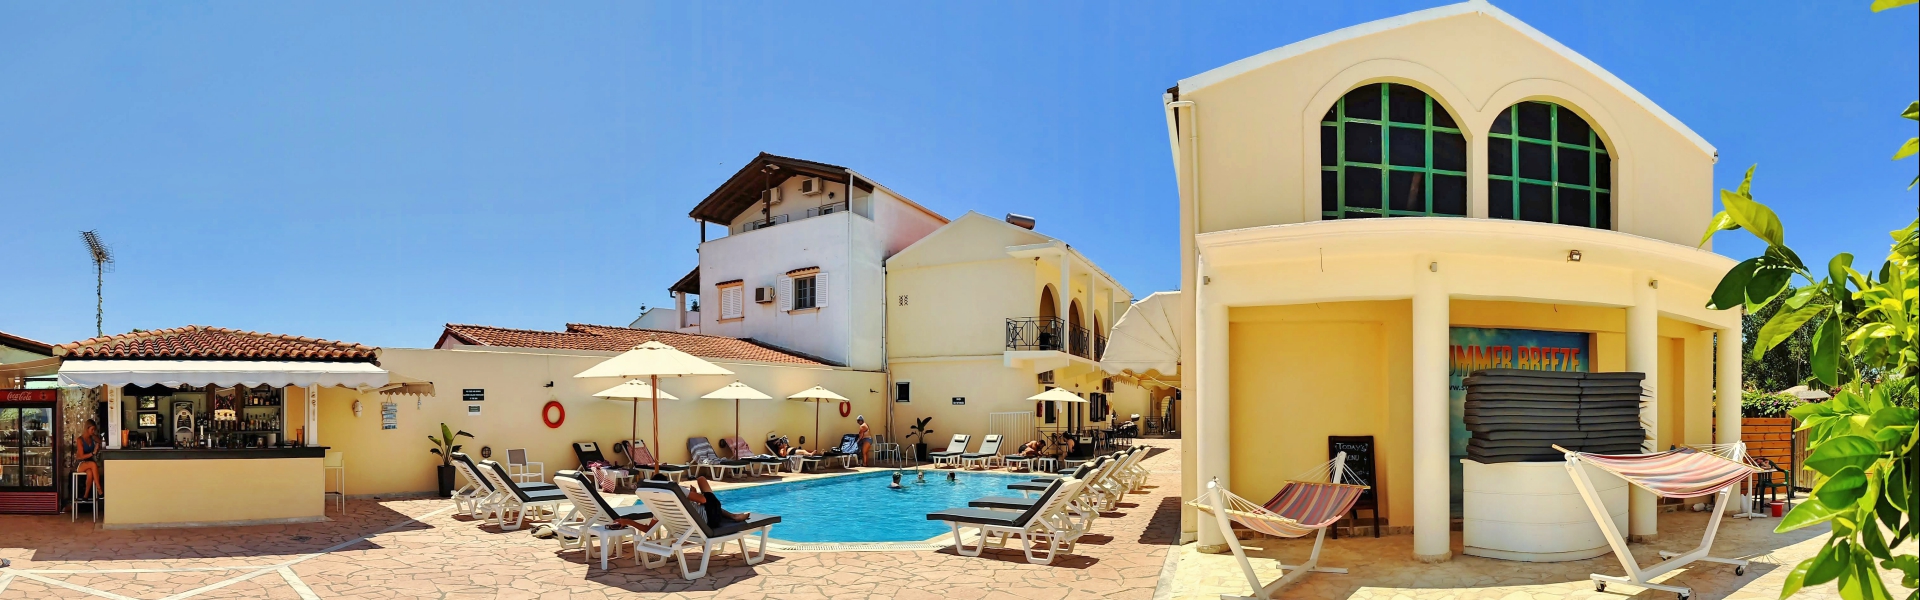 Swimming pool, beach view, Stavros Beach Hotel - Kavos